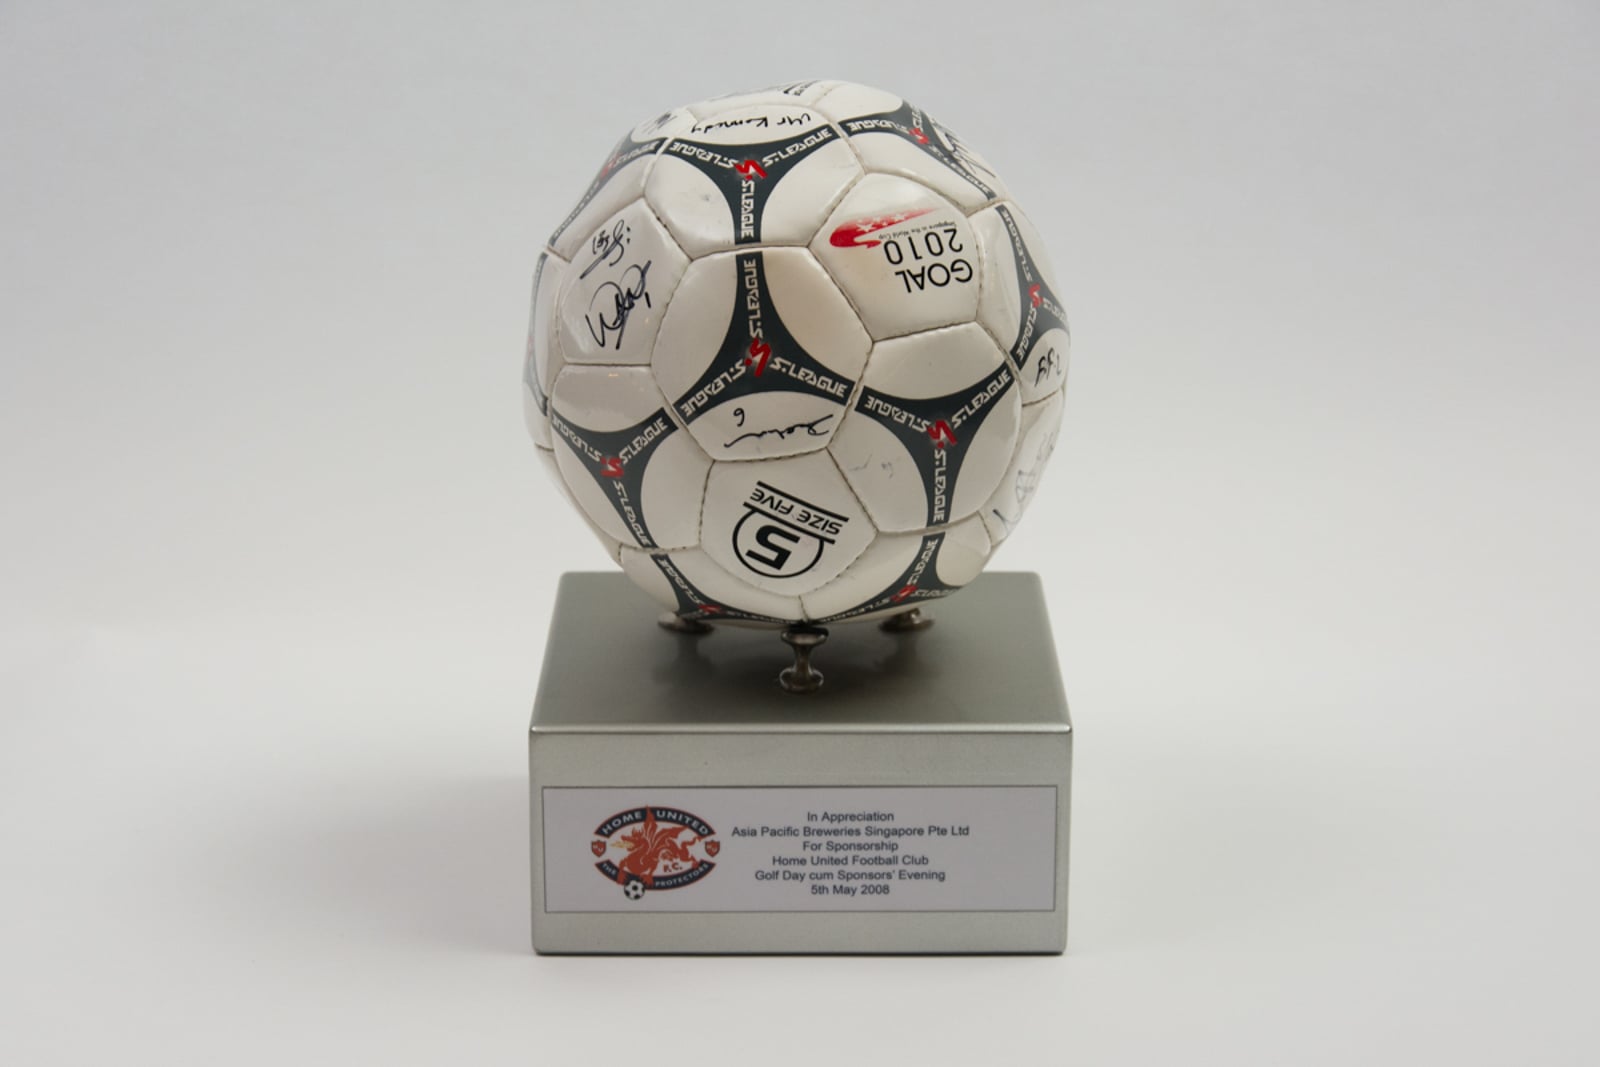 Home United Football Club Trophy 2008